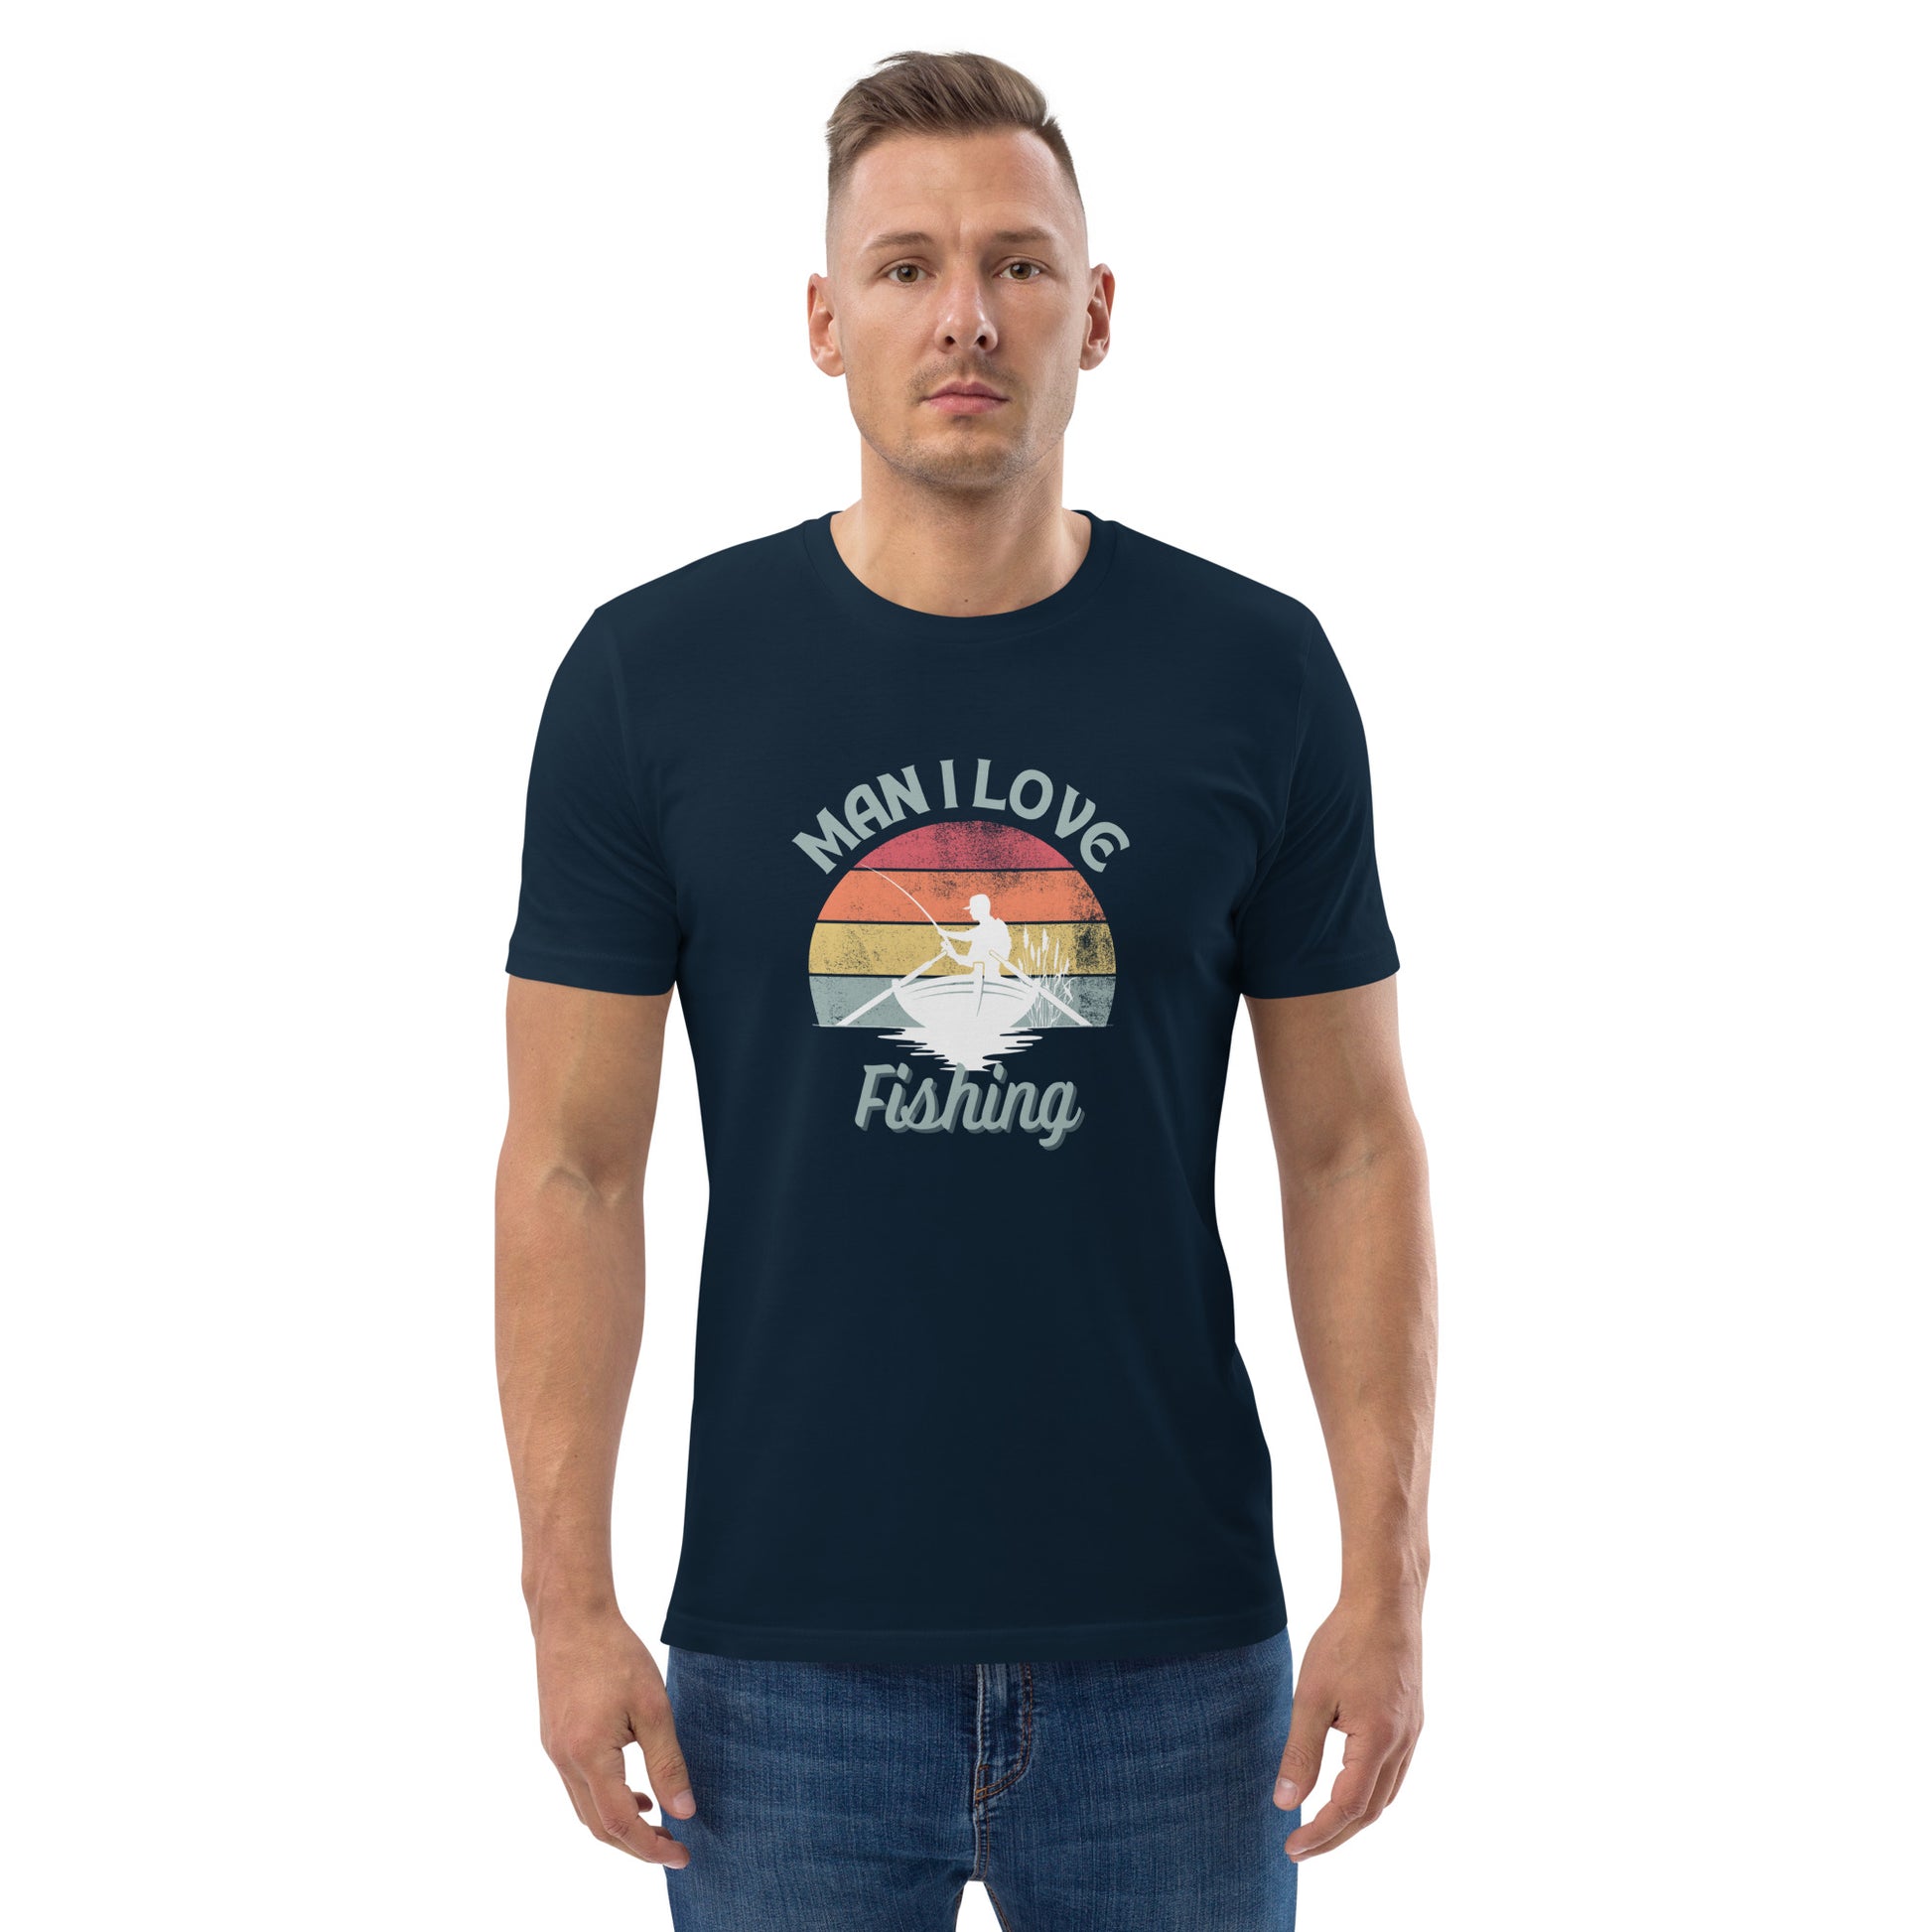 Man I Love Fishing Unisex organic cotton t-shirt - HobbyMeFree